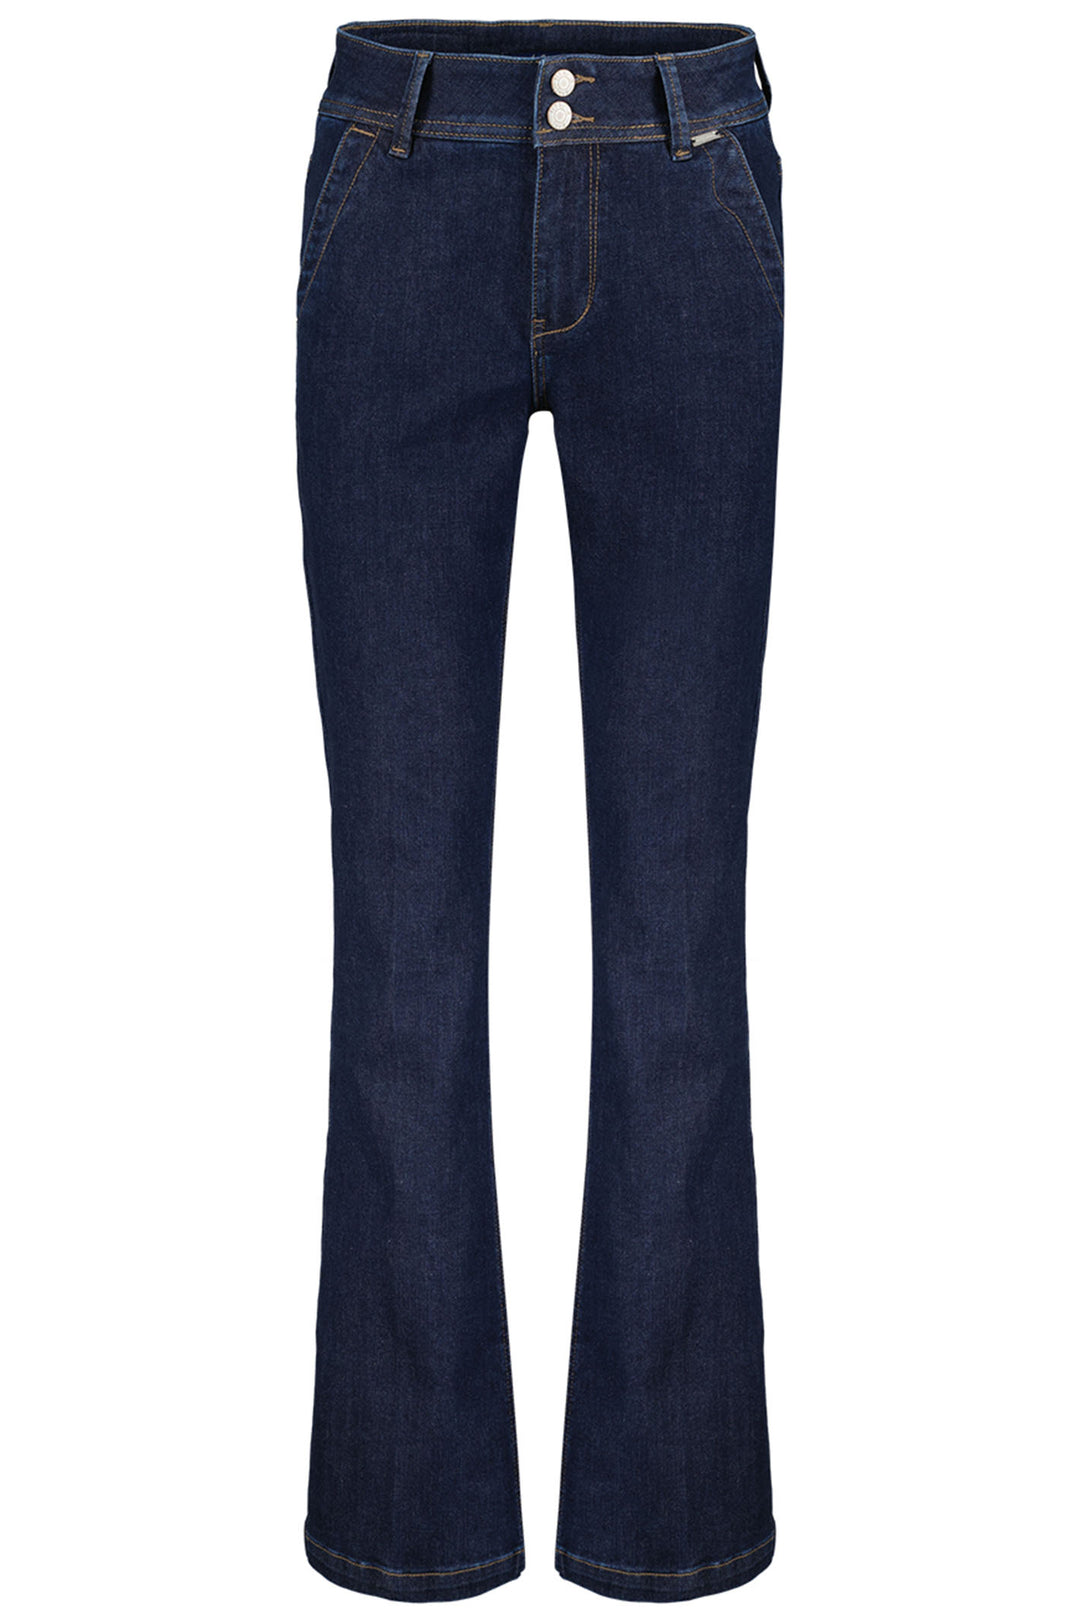 Red Button Bibette Jeans Dark Blue SRB4281 - Olivia Grace Fashion